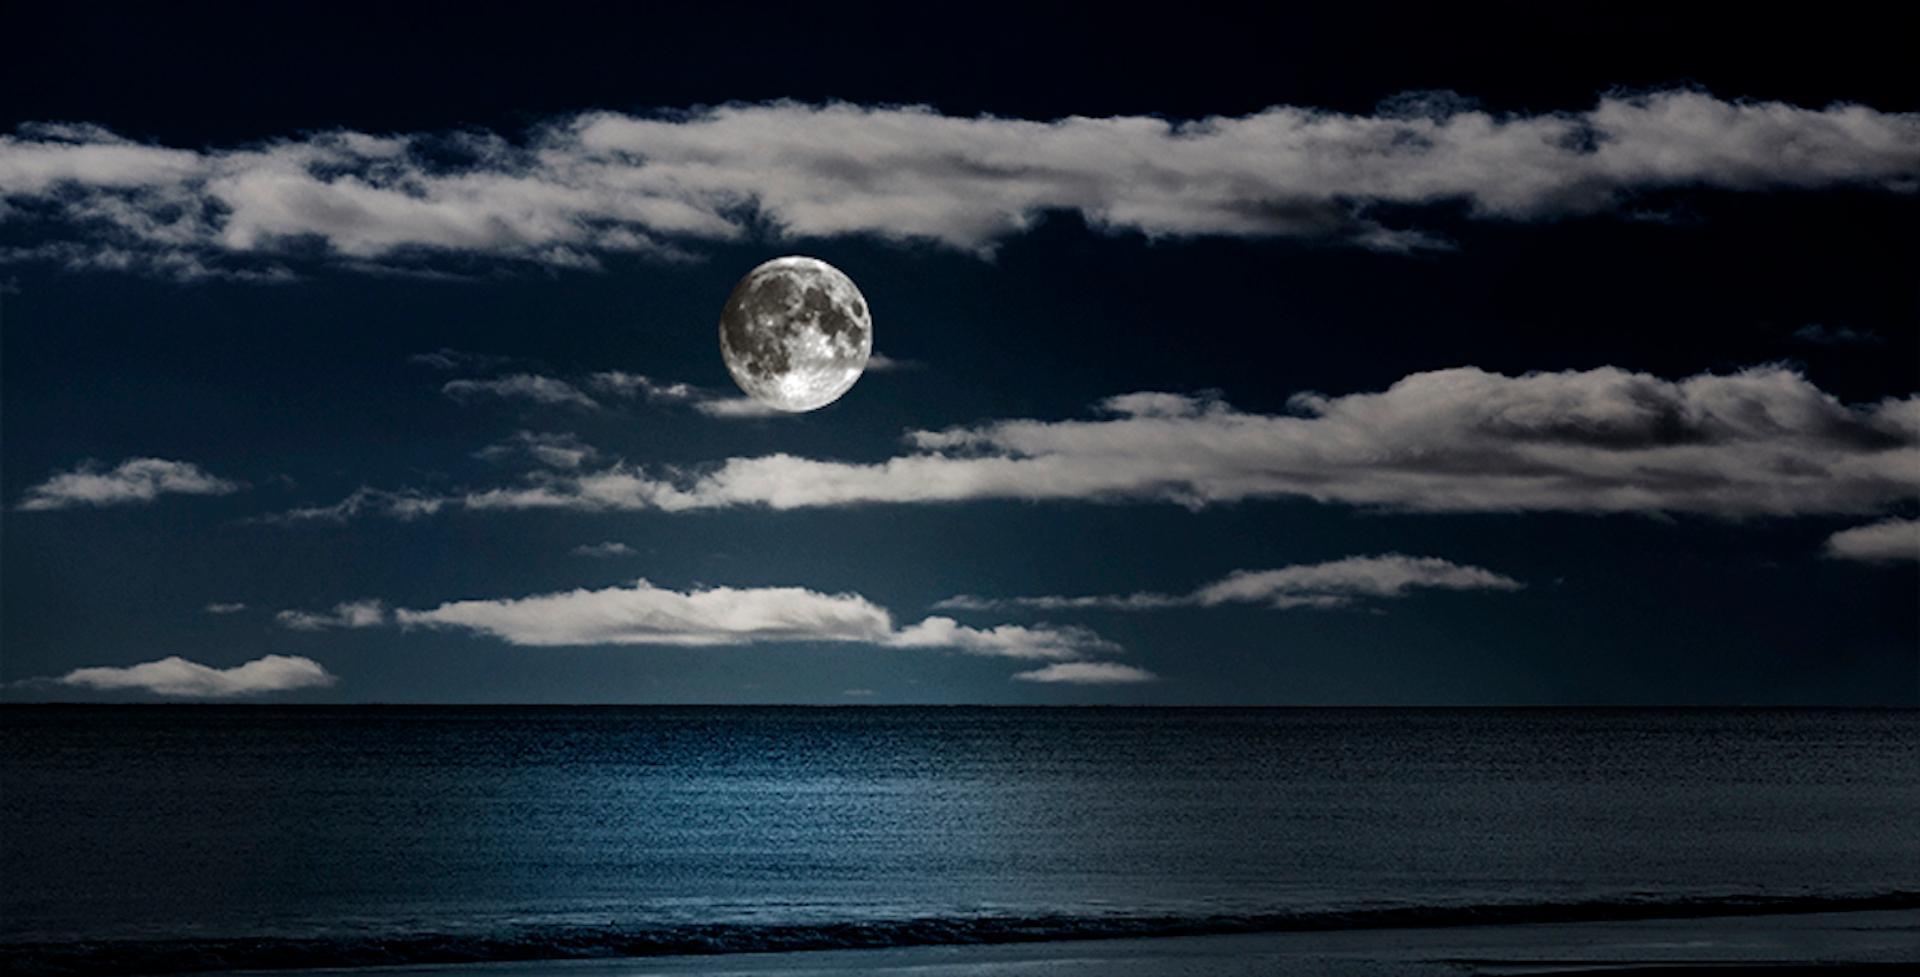 Moon #08 - Photograph by Bob Tabor